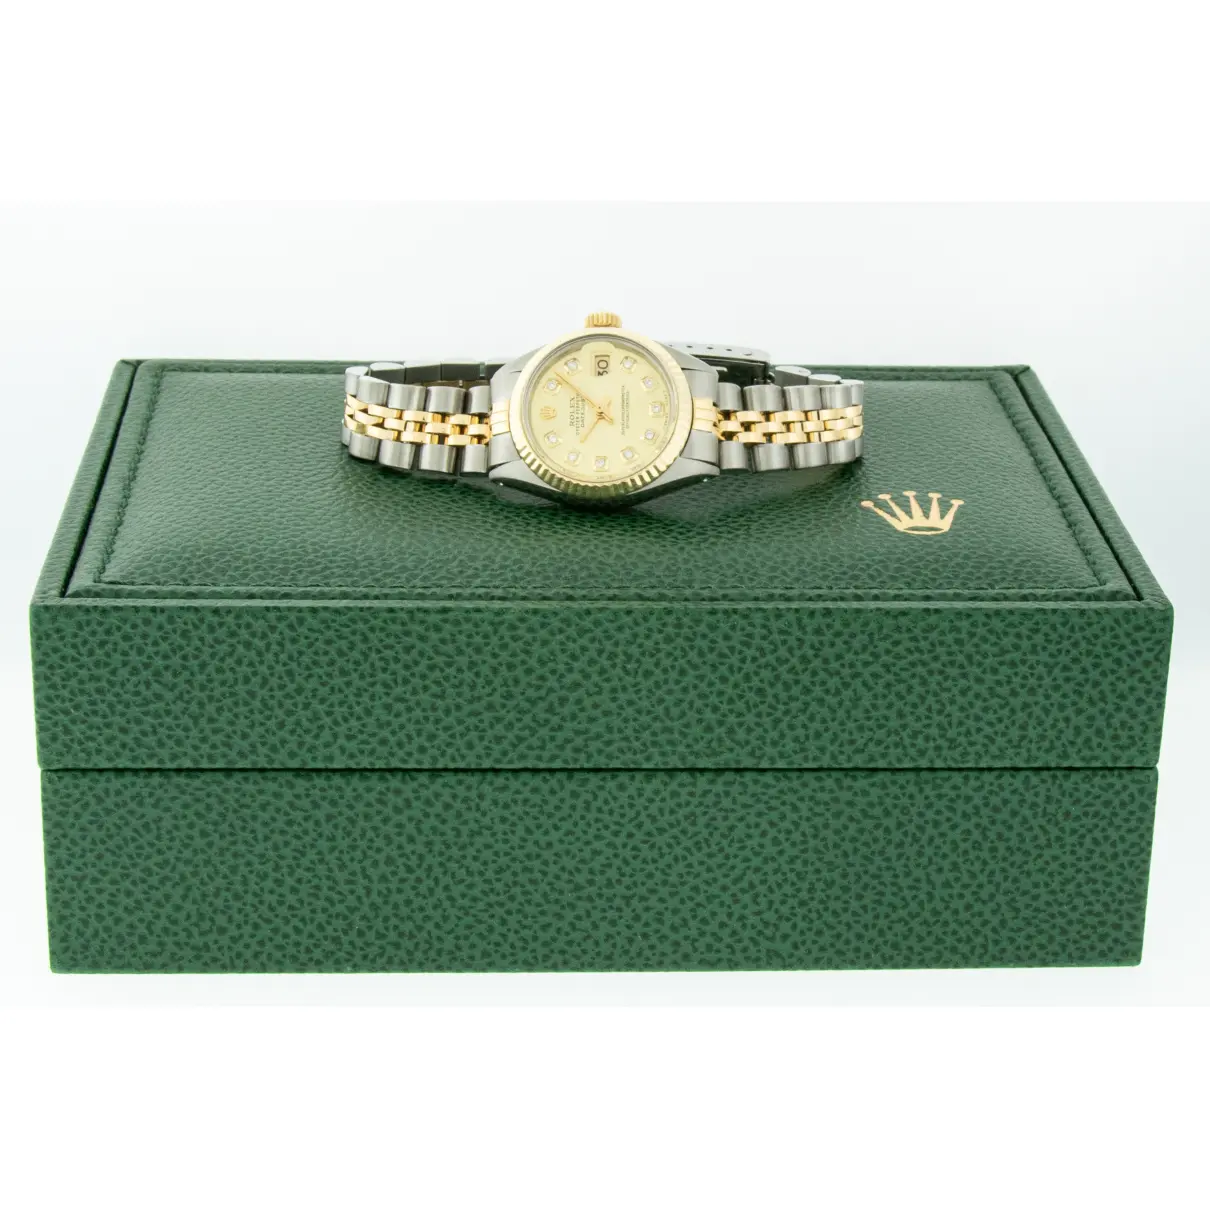 Lady DateJust 26mm watch Rolex - Vintage